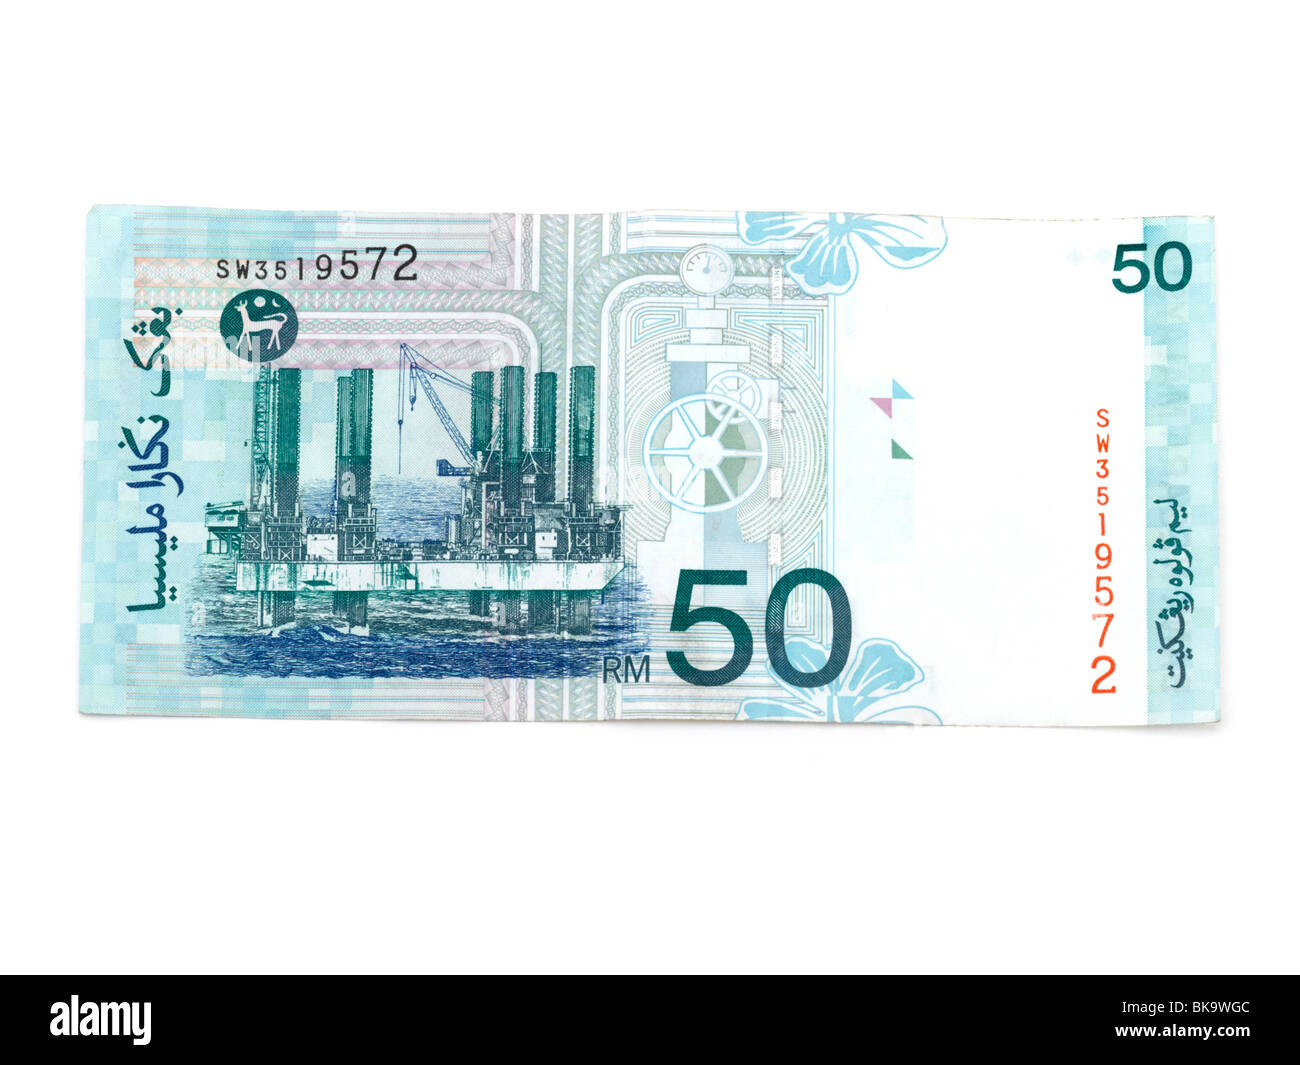 Malayasian Banknote 50 Ringgit Stock Photo